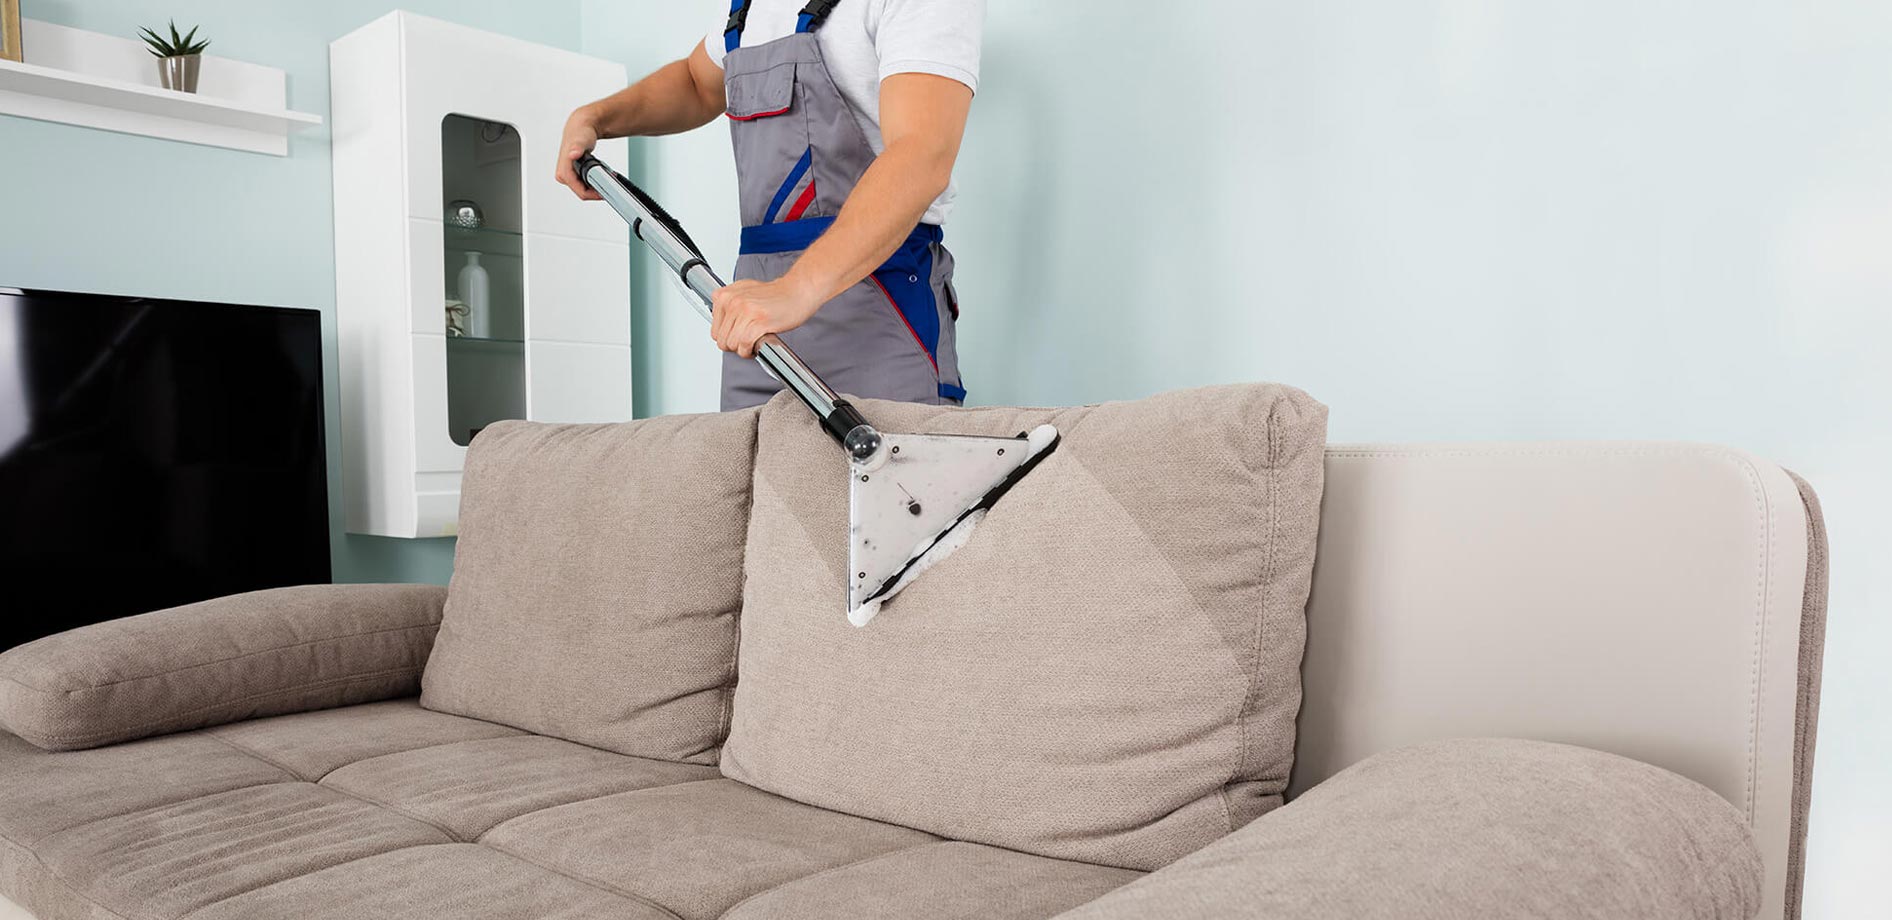 D102 Detailer Carpet and Upholstery Cleaner, 19oz